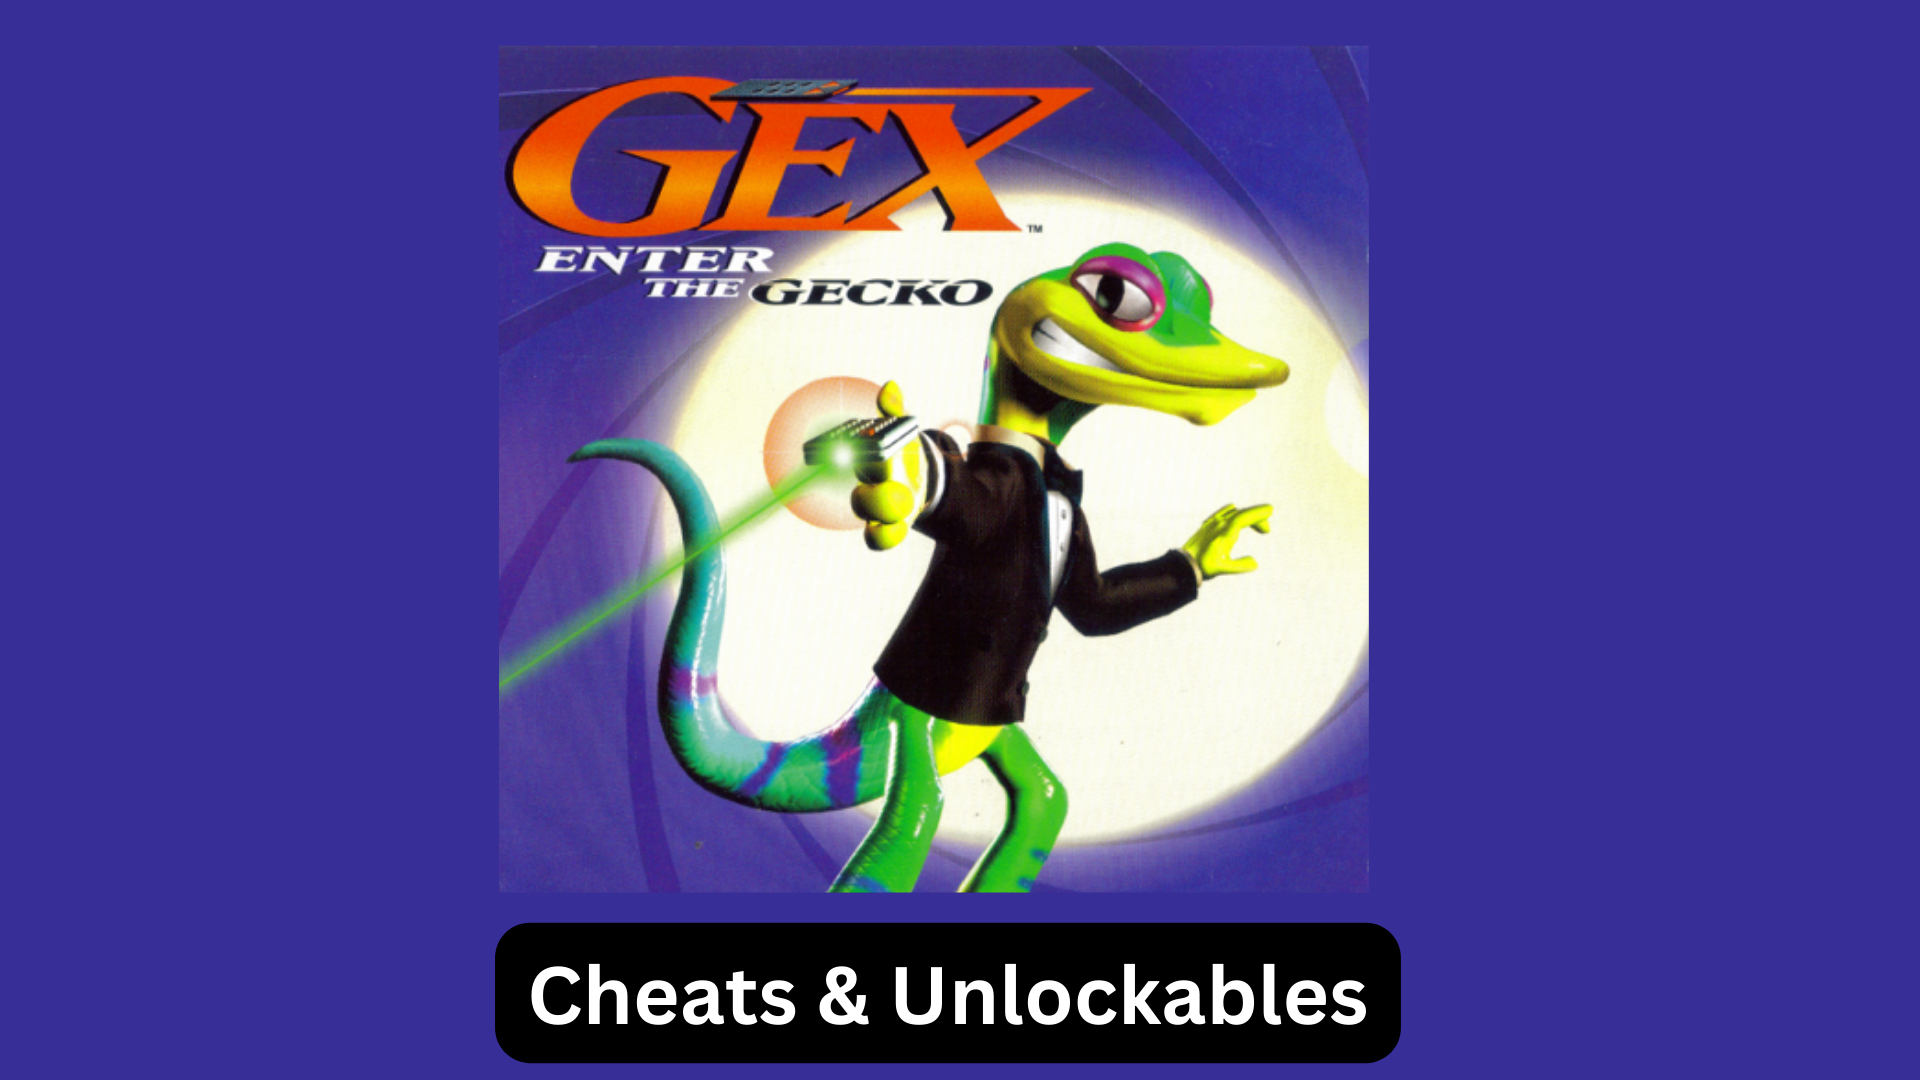 gex: enter the gecko cheats and unlockables